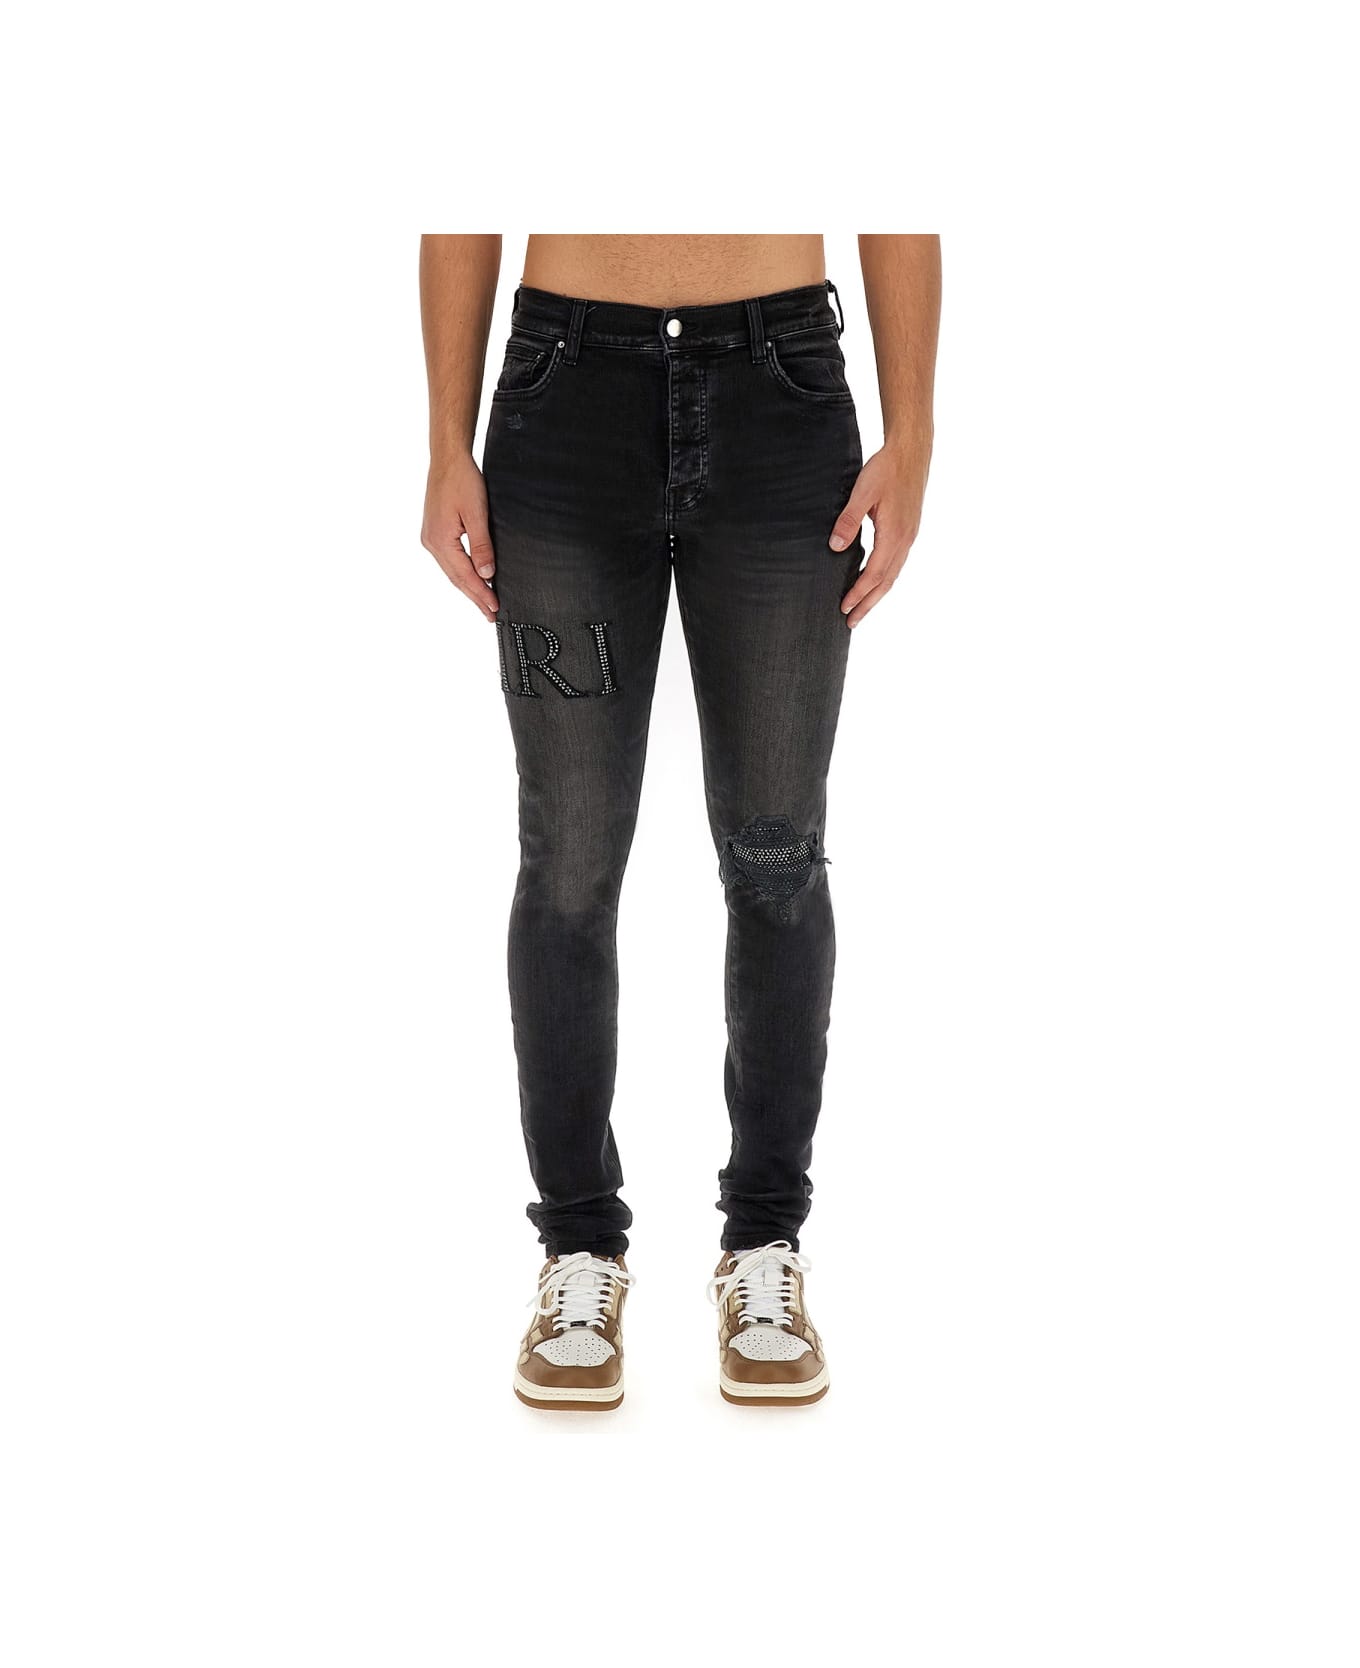 AMIRI Slim Fit Jeans - BLACK デニム